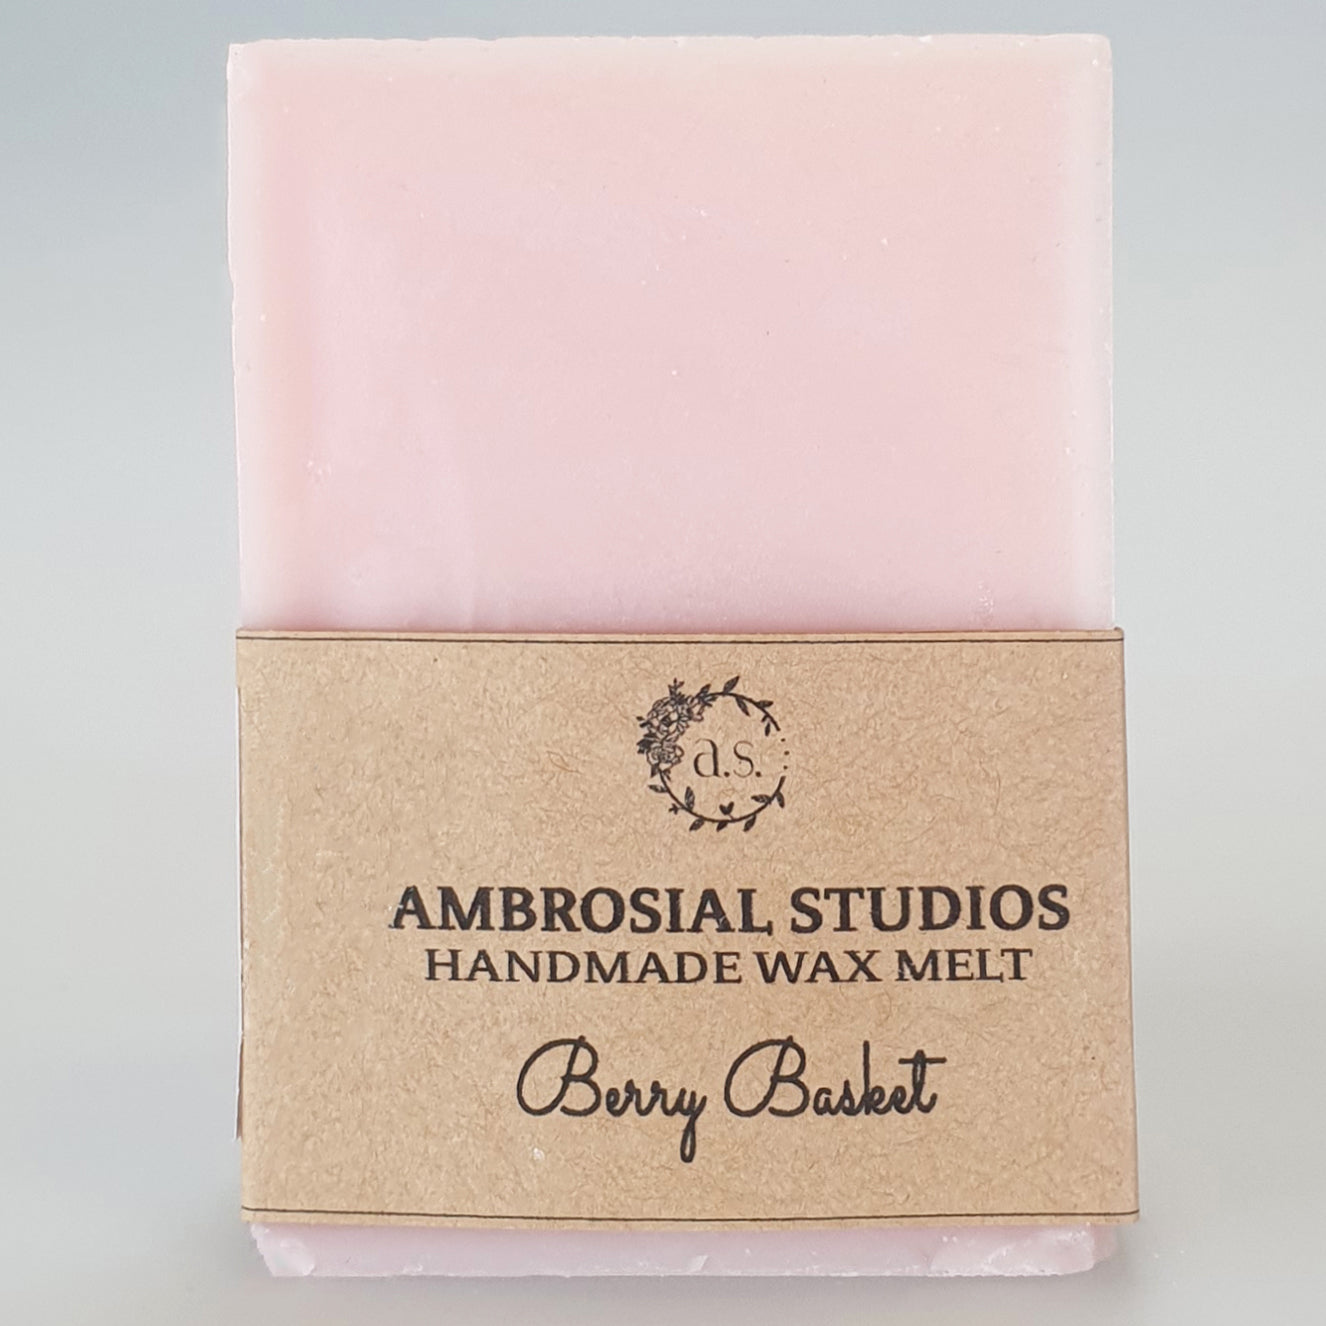 Ambrosial Studios - Handmade Wax Melt - Berry Basket